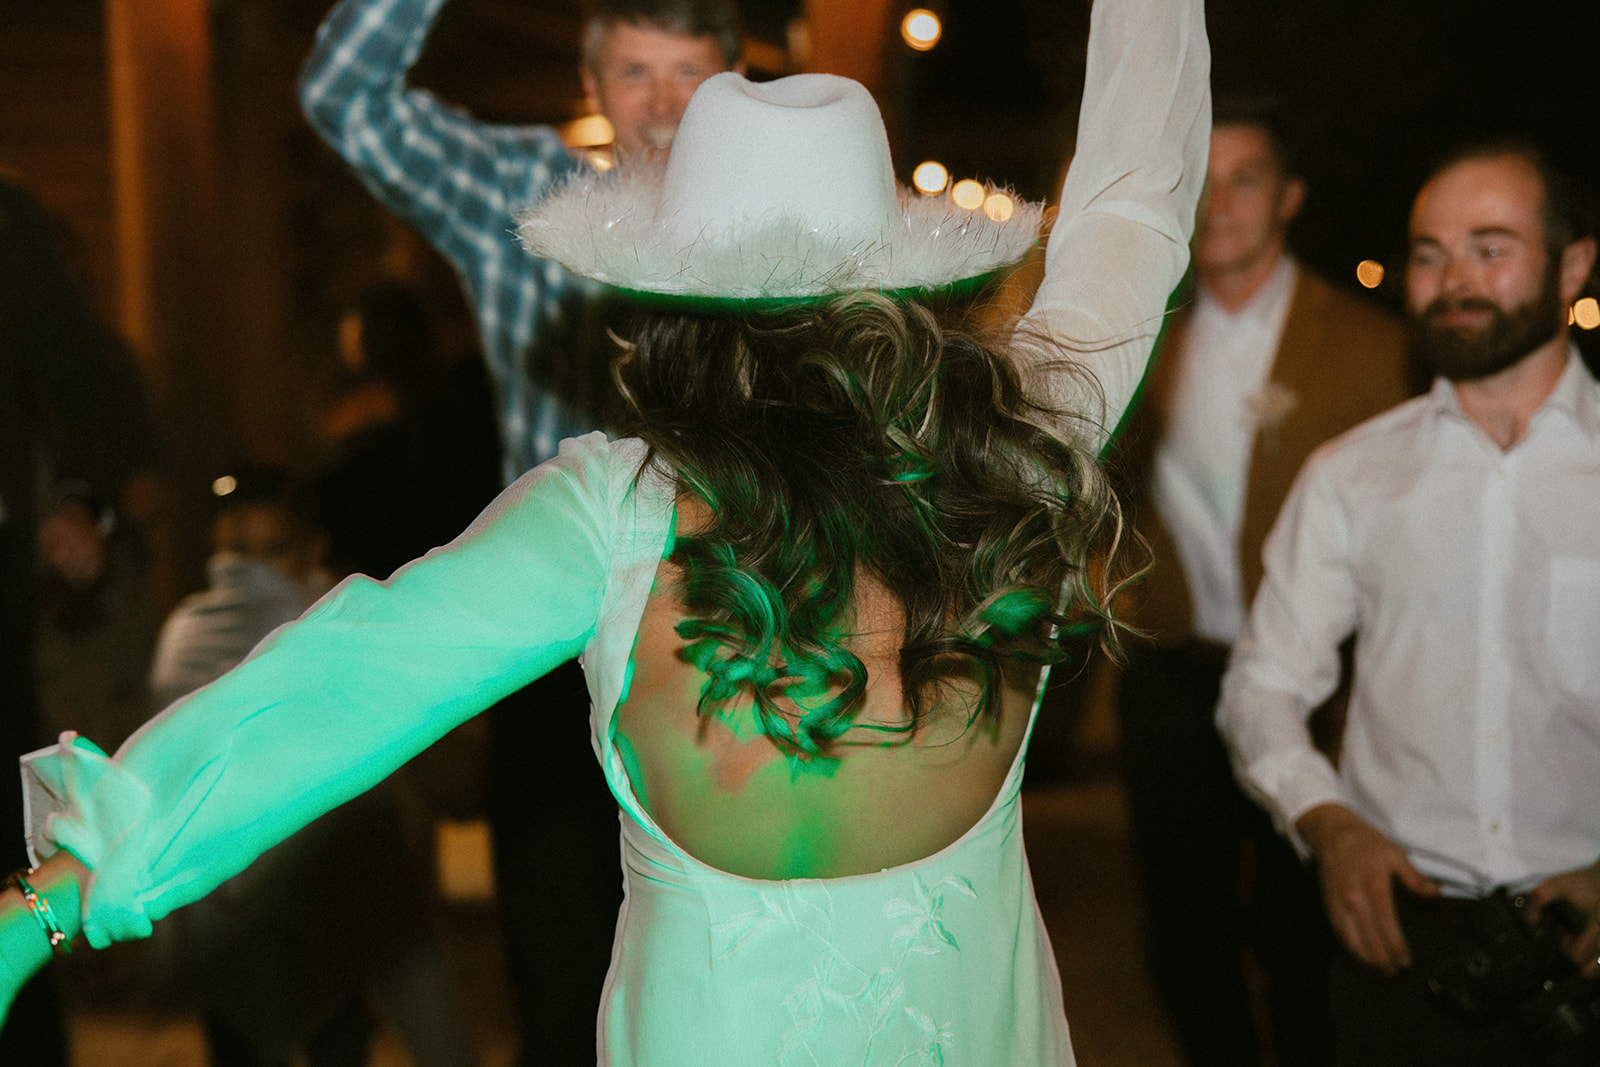 Bride dancing